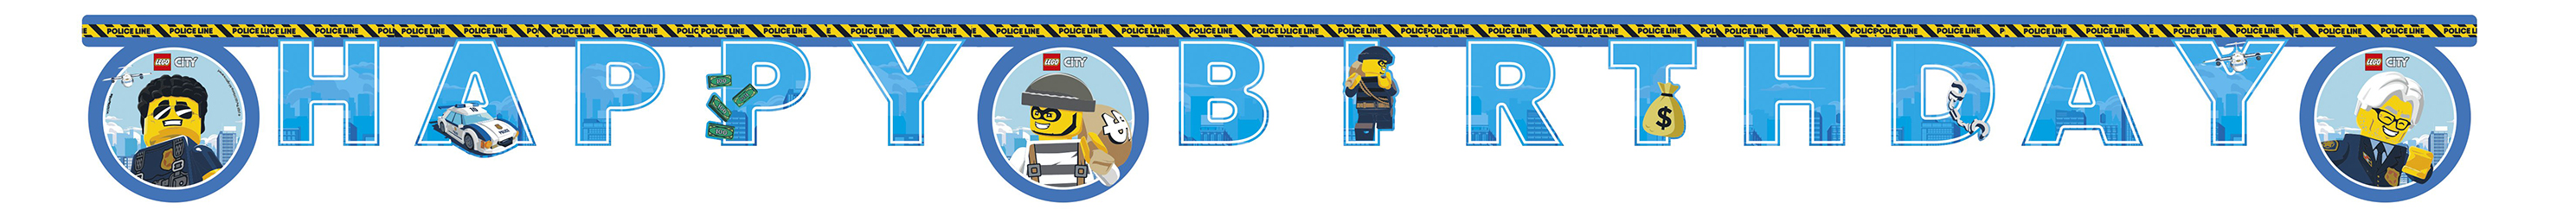 Procos Banner Happy Birthday Lego City